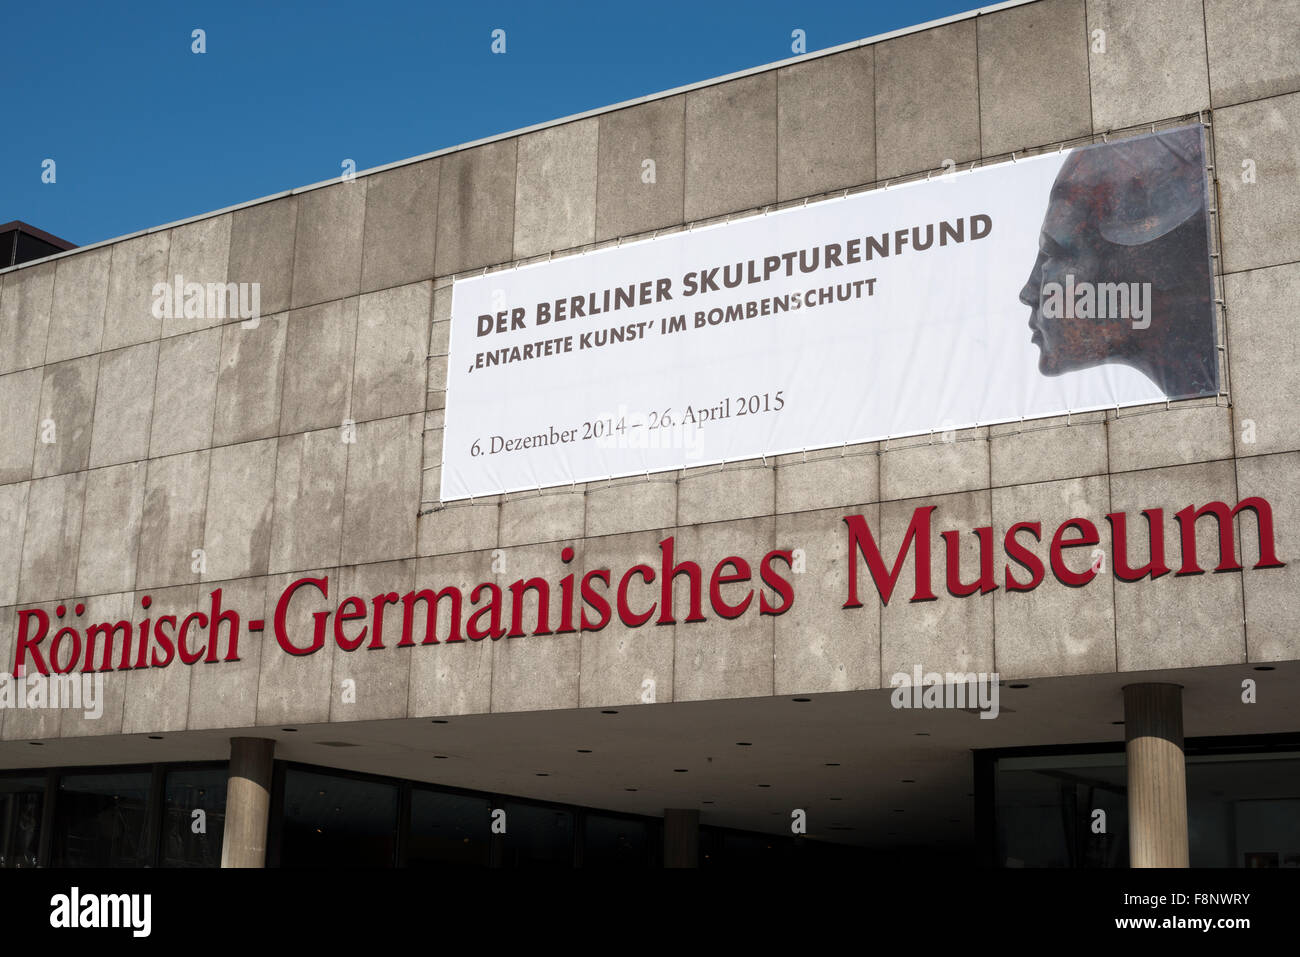 Der Berliner Skulpturenfund exhibition, Komisch-Germanisches Museum, Cologne, Germany. Stock Photo